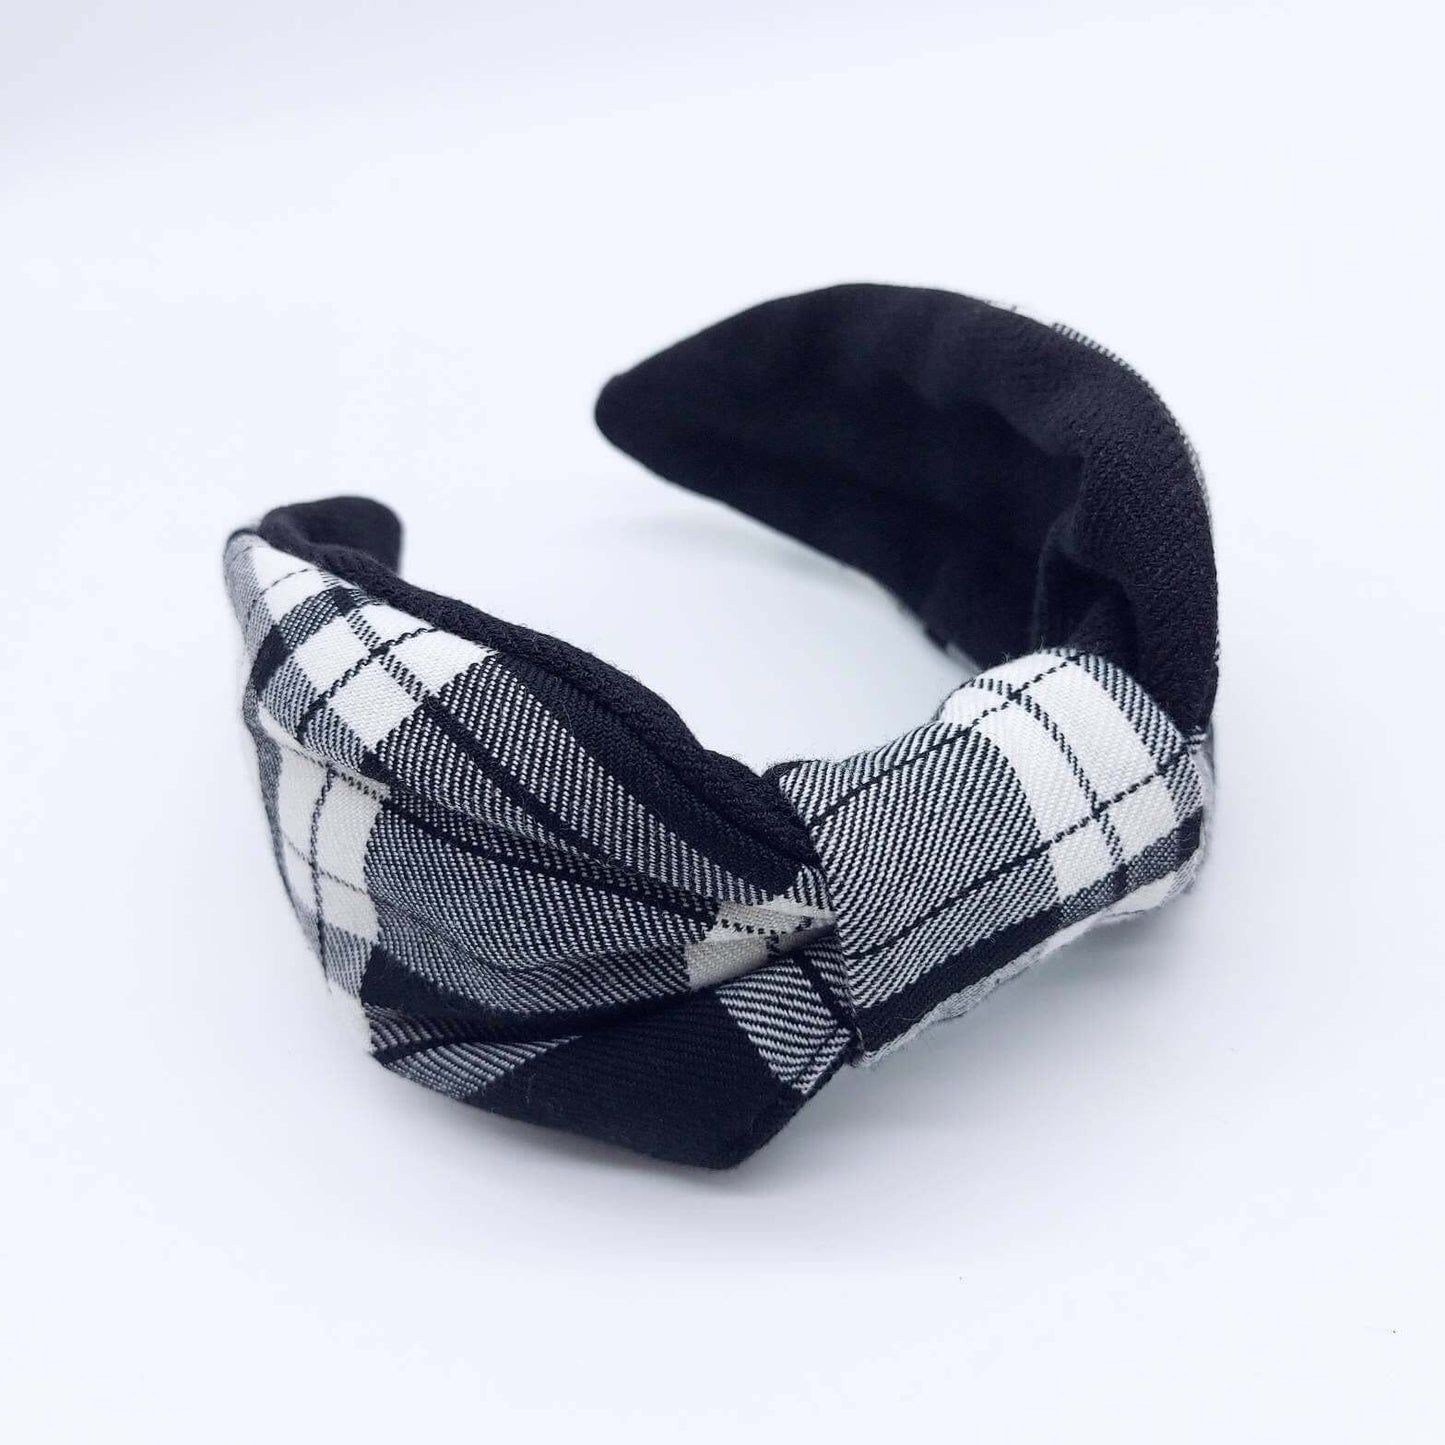 A bow-style, black and white,  tartan plaid fabric headband with plain black lining underneath.